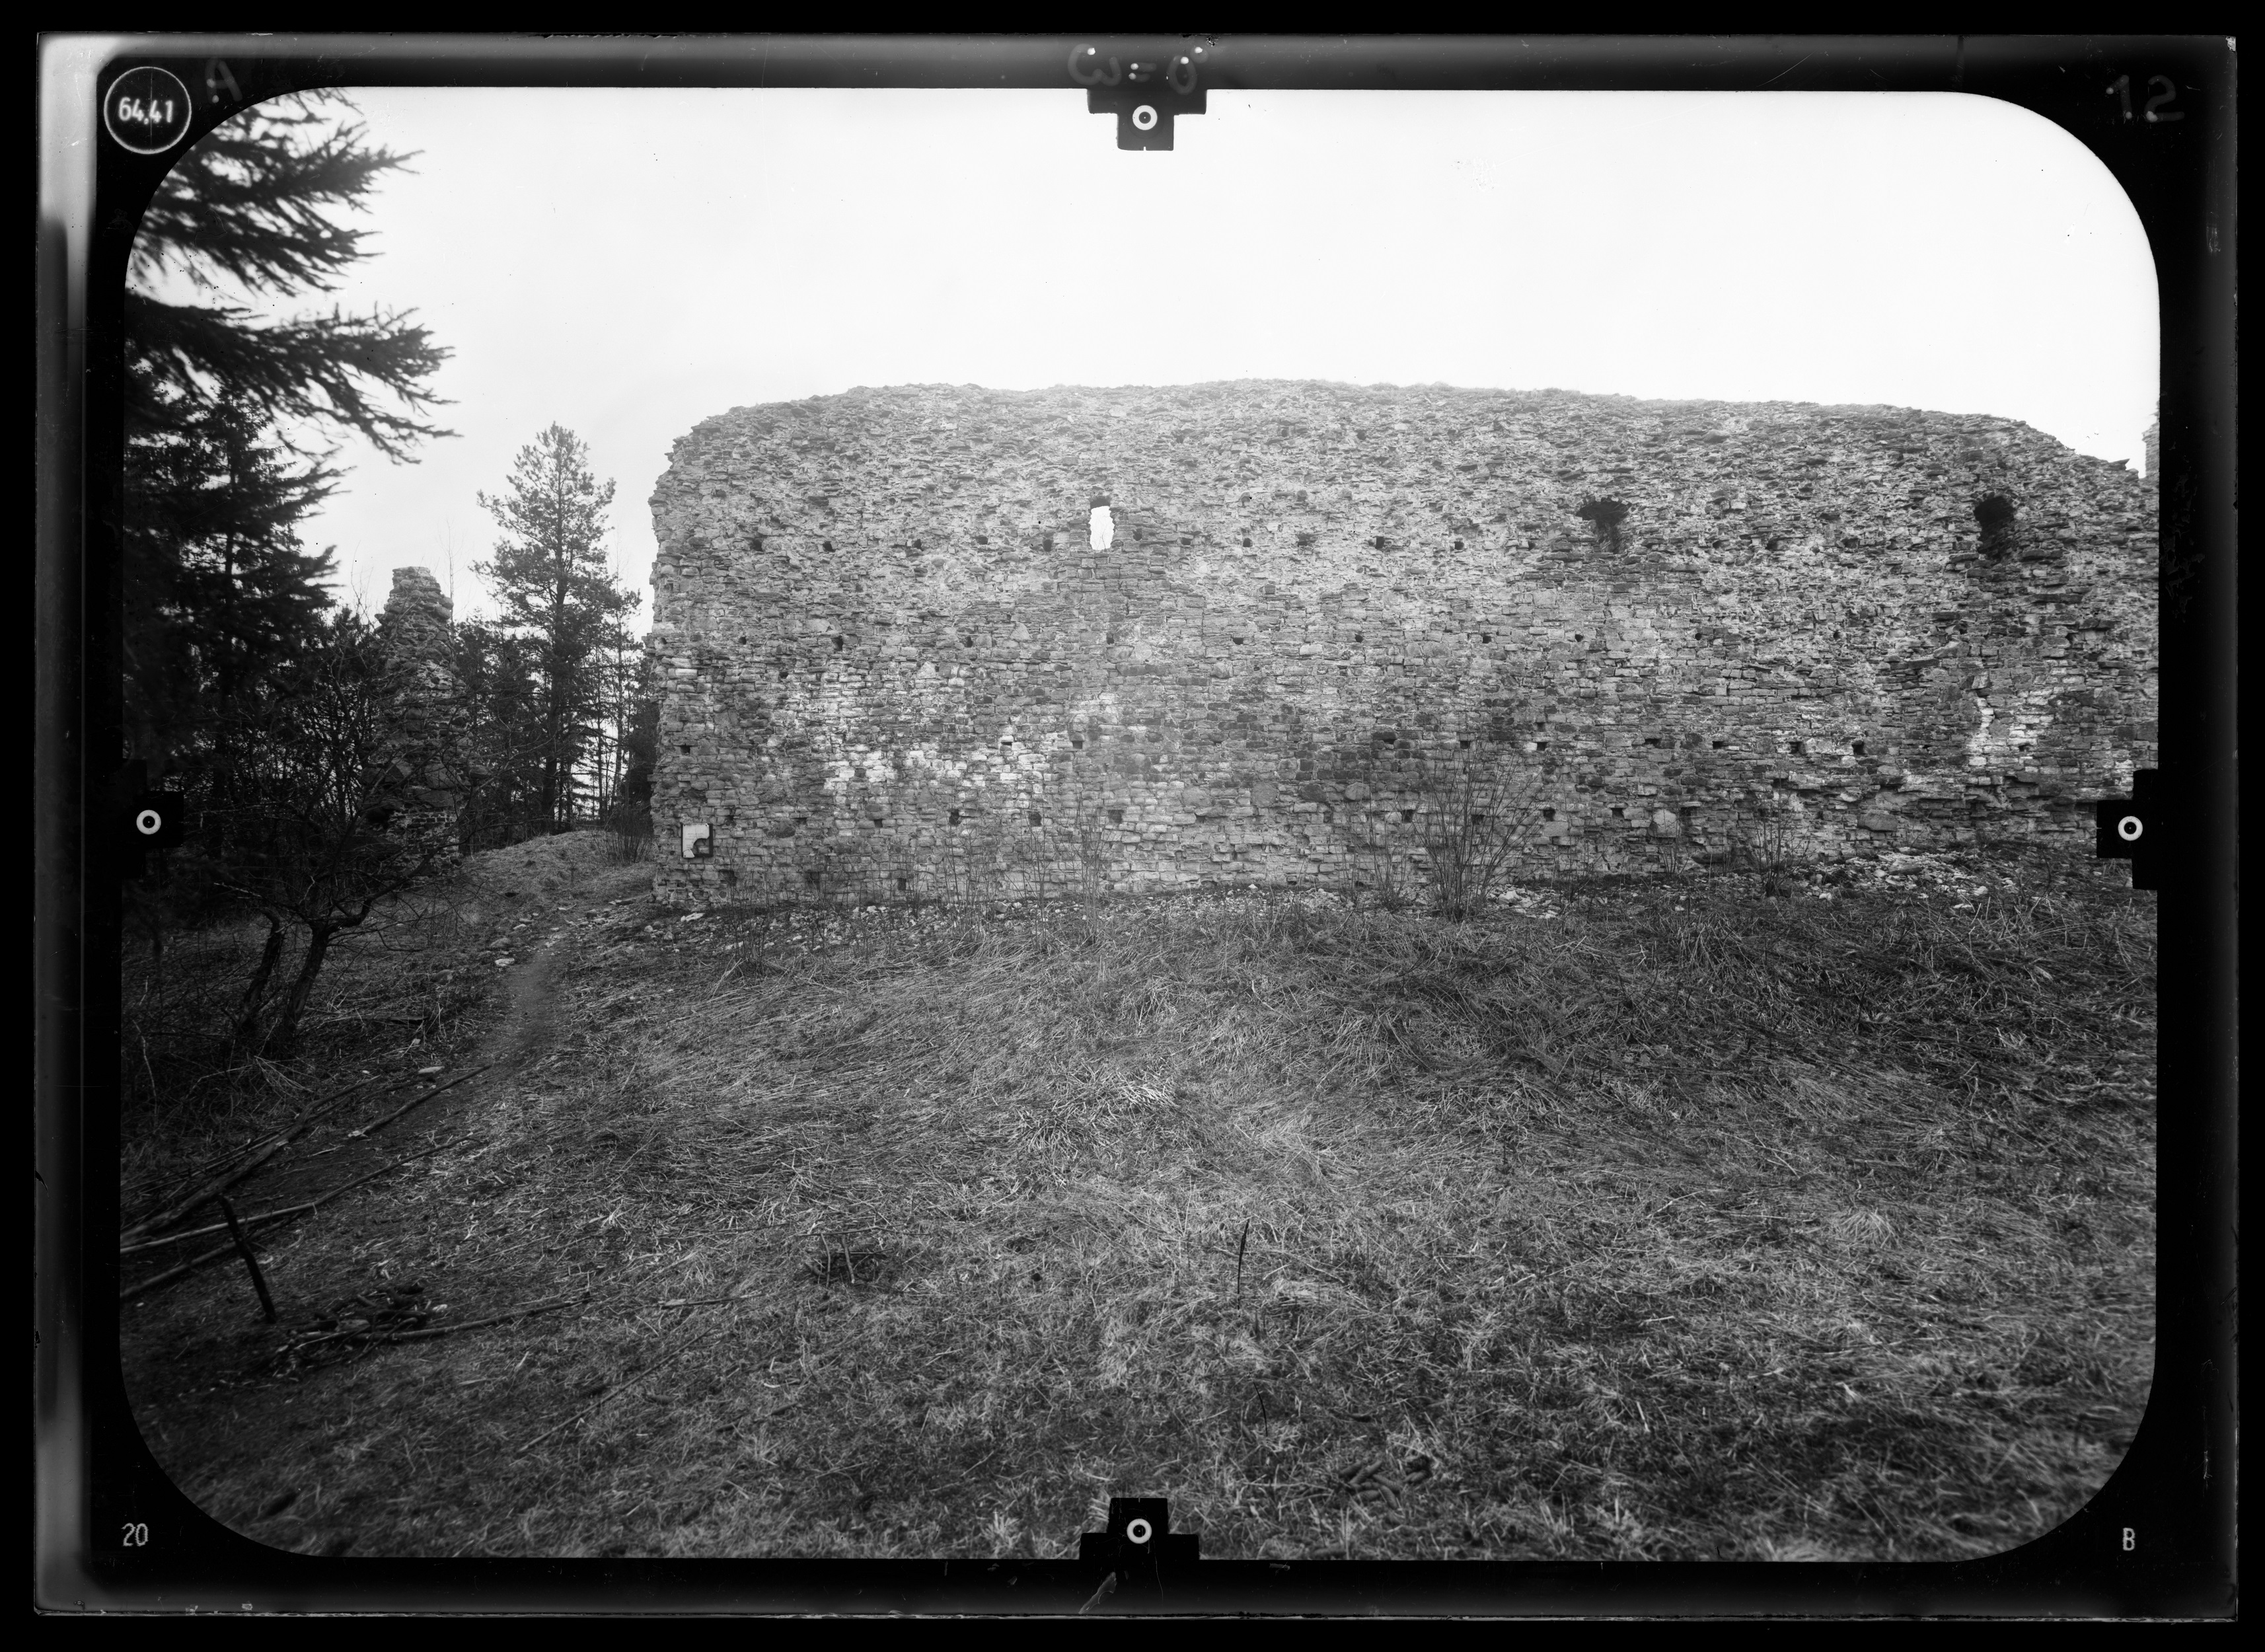 Vastseliina fortress A12-0 - Vastseliina Bishop Castle and fortress. Photogrammetric survey 1991